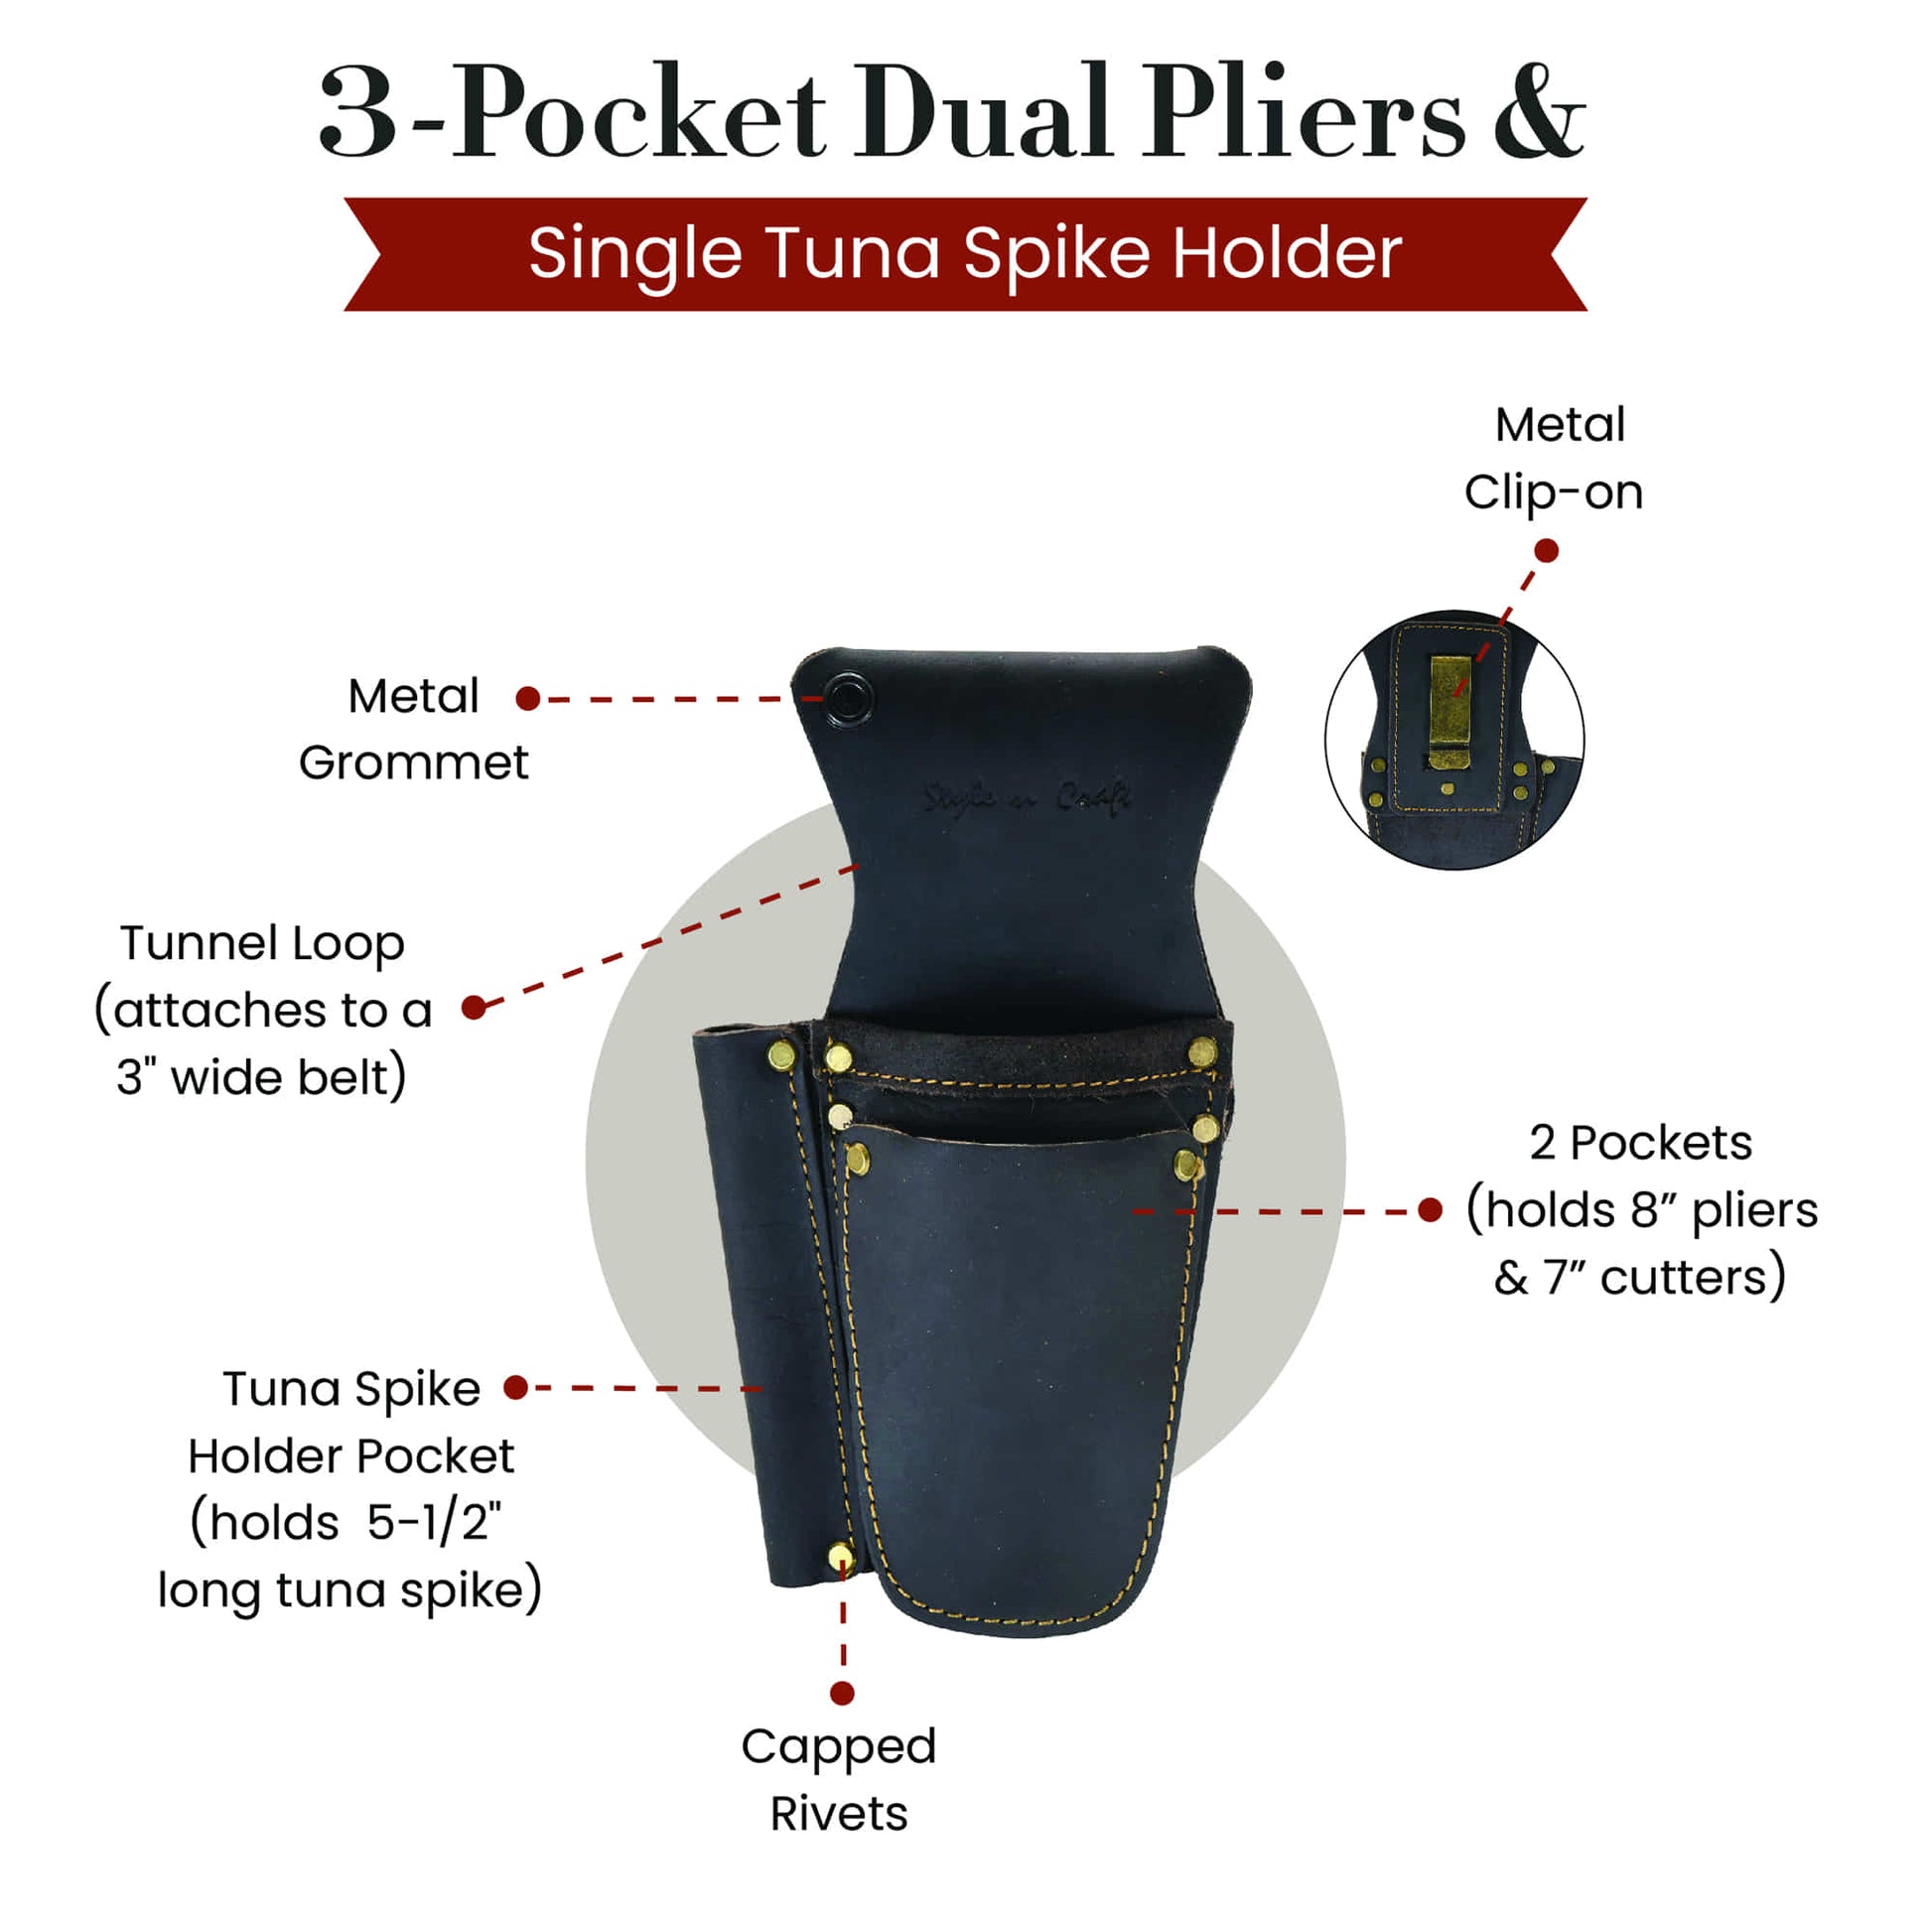 Style N Craft 98016 - 5 Pocket Pliers & Hammer Holder in Dark Tan Top Grain Leather